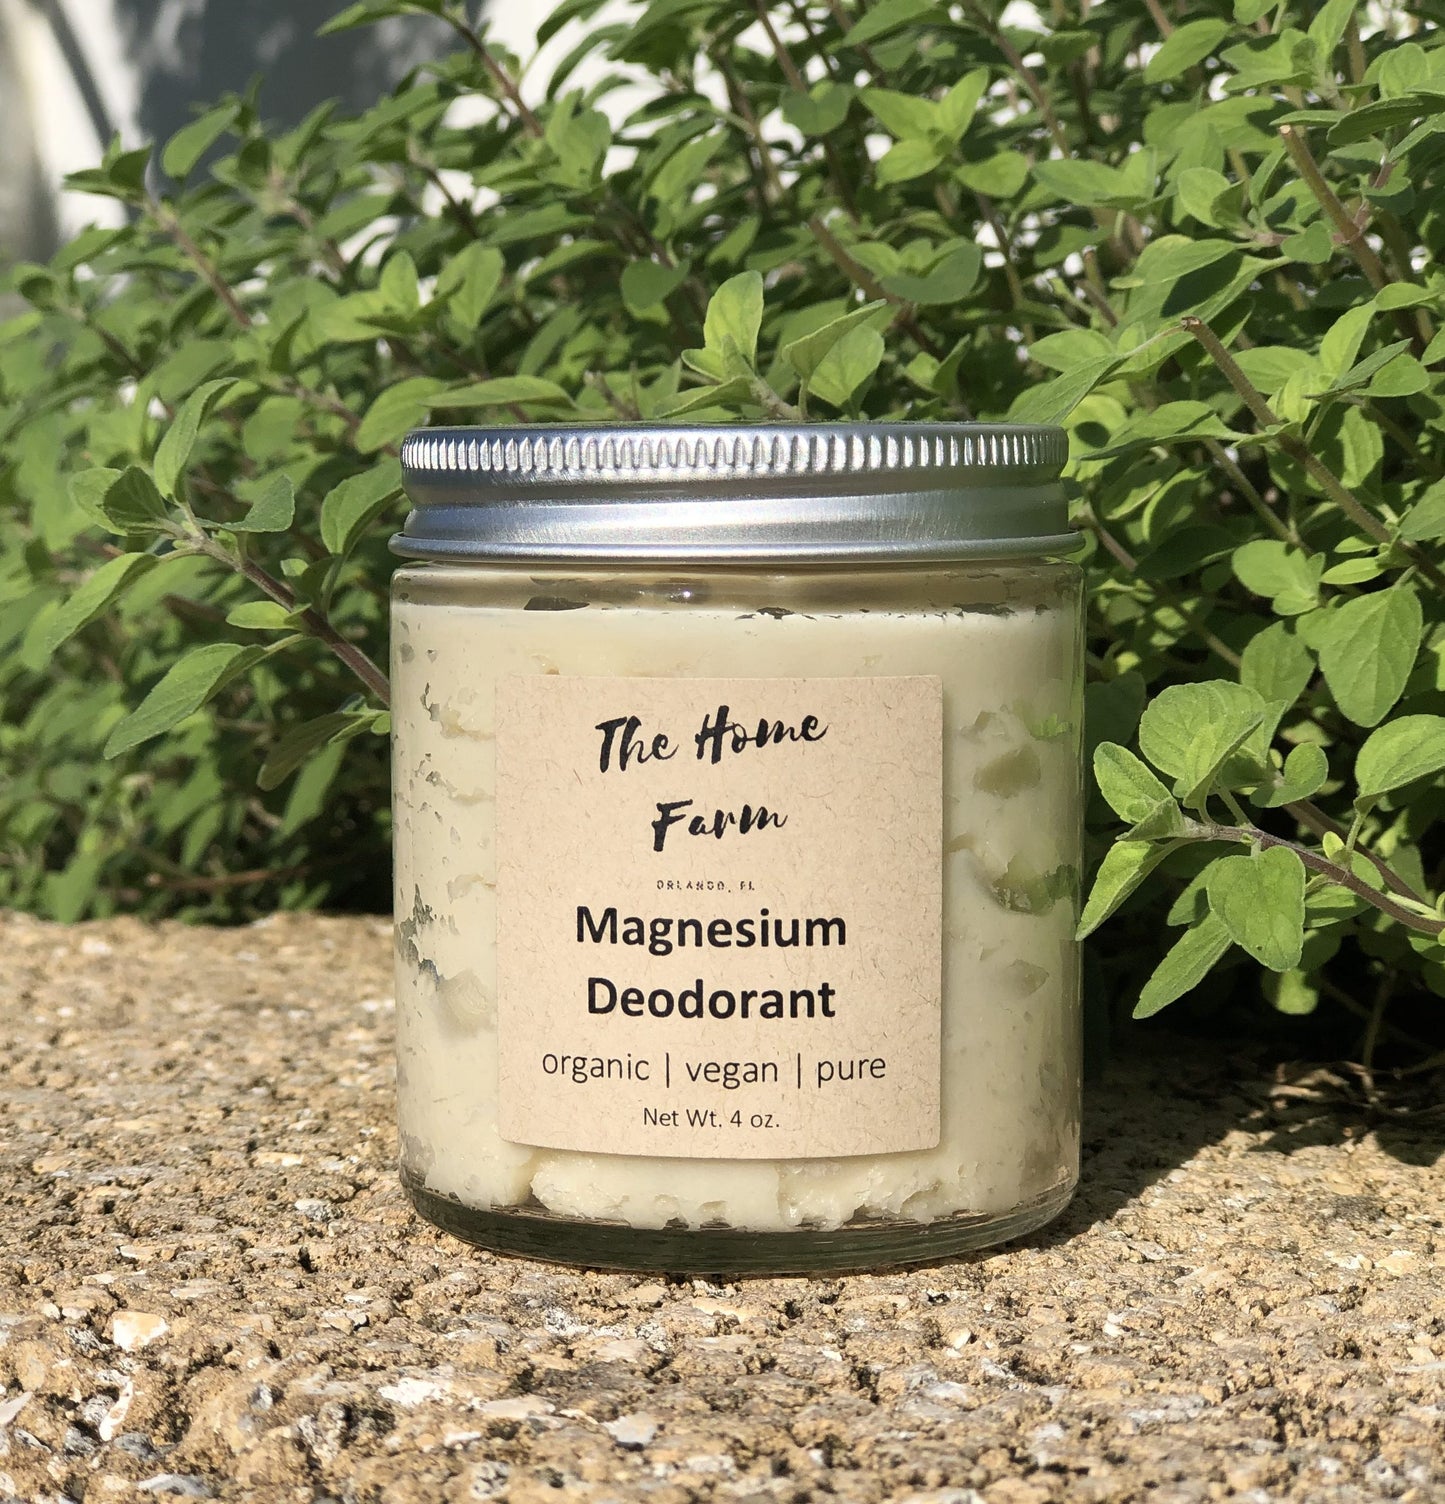 Magnesium Deodorant made with Certified Organic & Vegan Ingredients